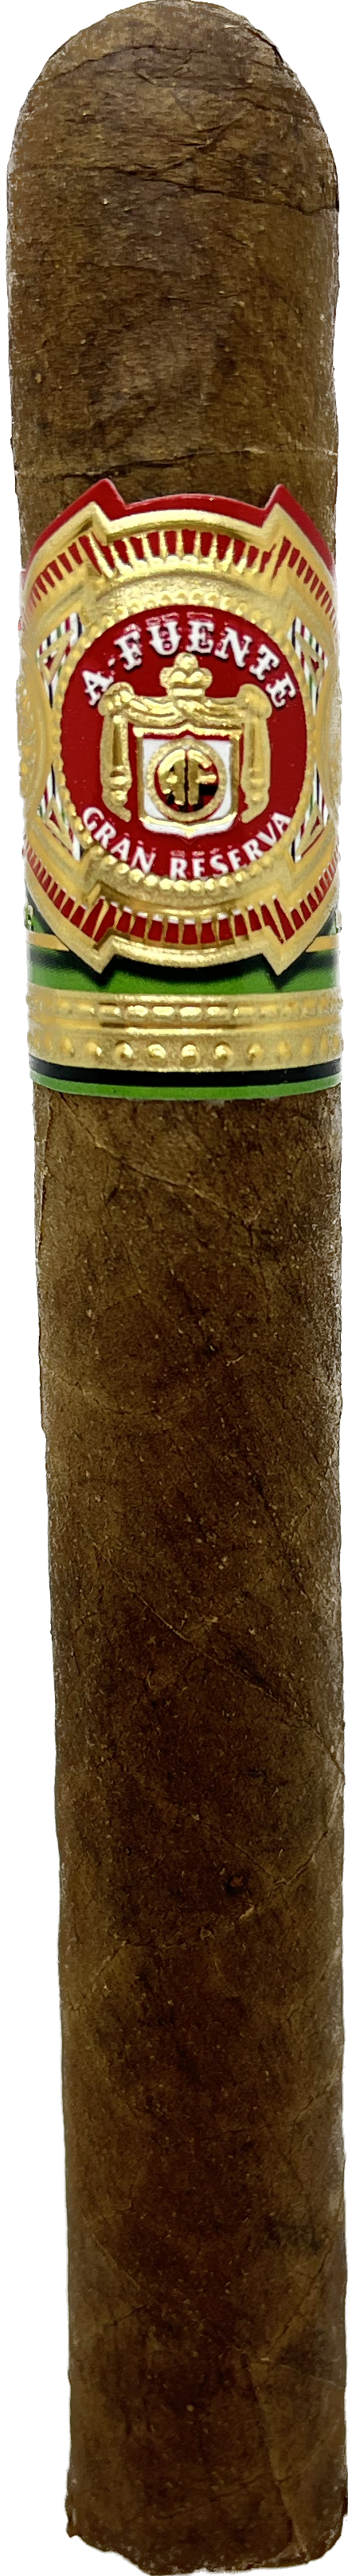 florfina 858 cigar